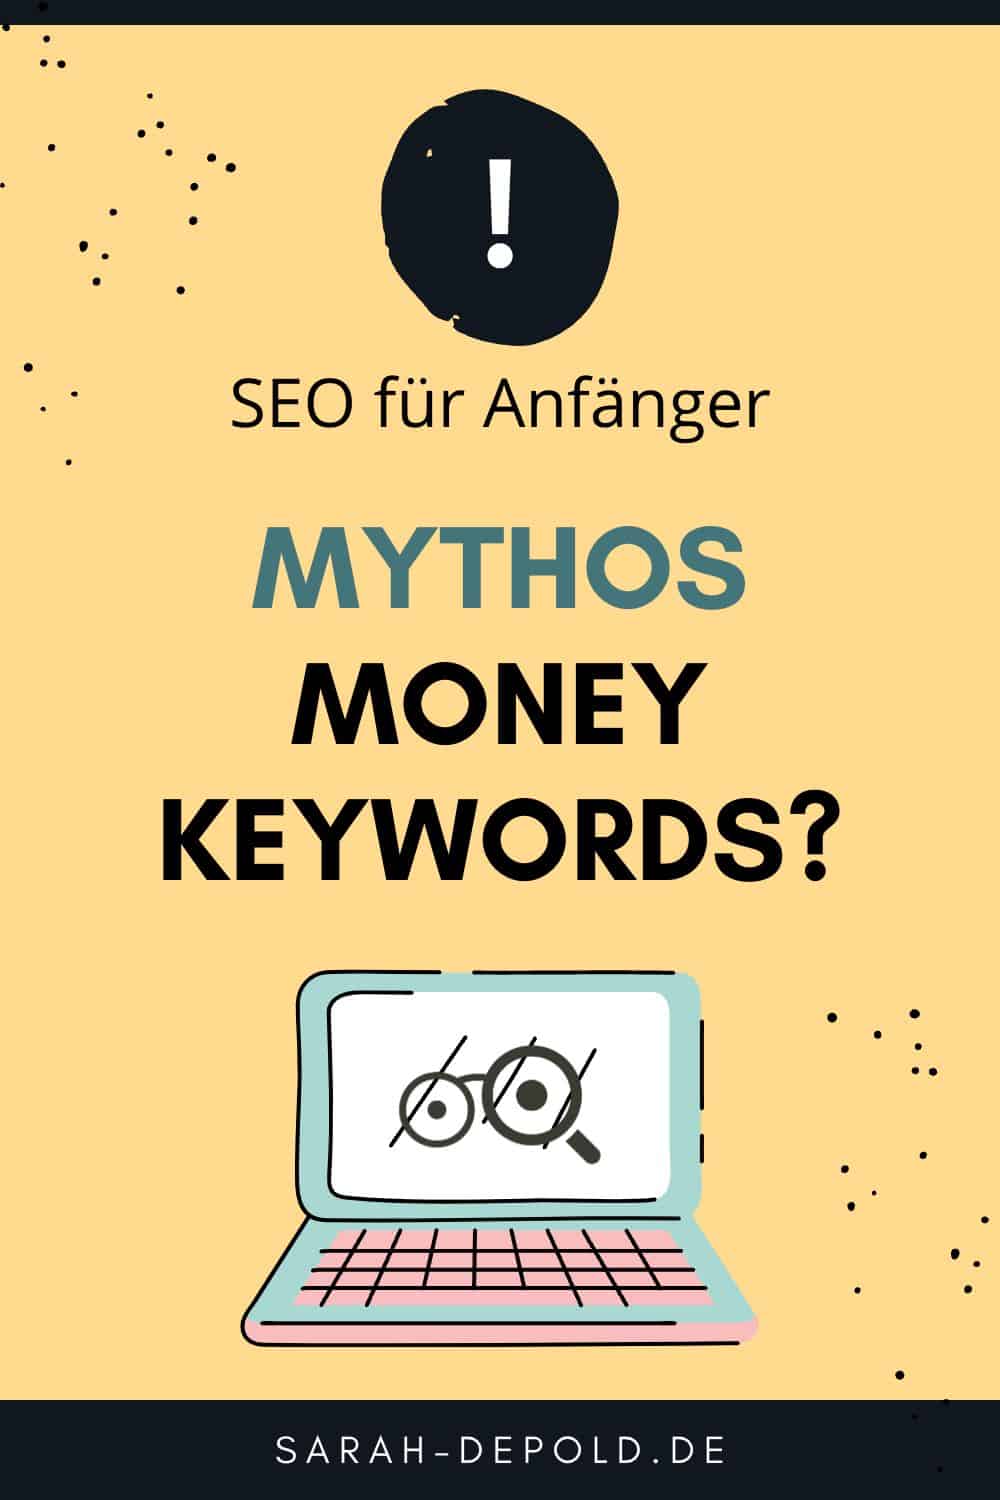 Mythos Money Keywords - was ist dran? - sarah-depold.de